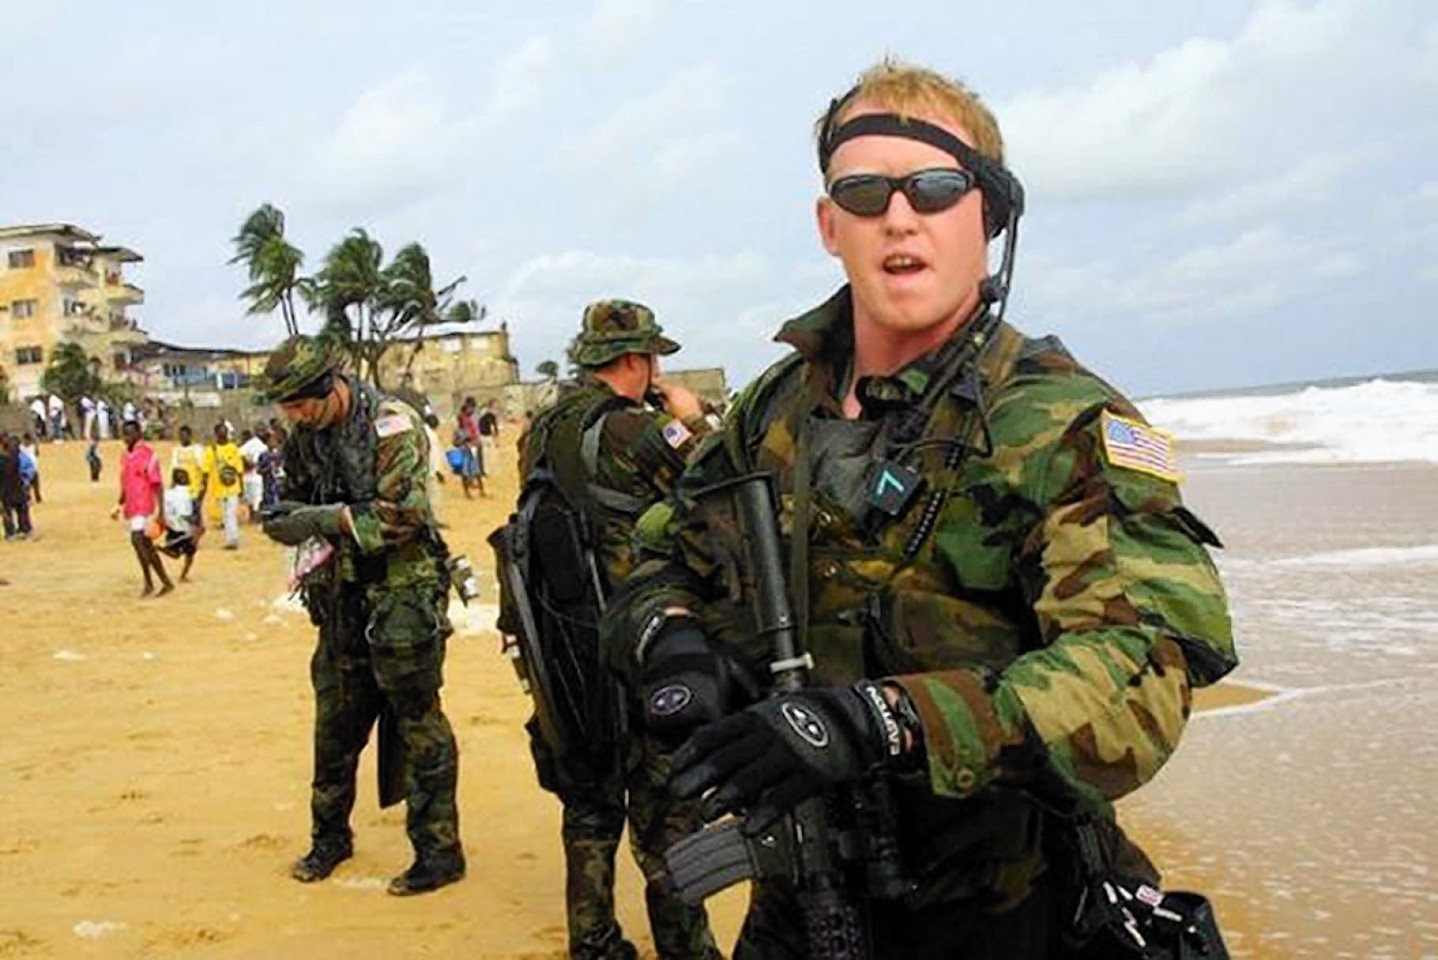 Osama Bin Laden's shooter Rob O'Neill